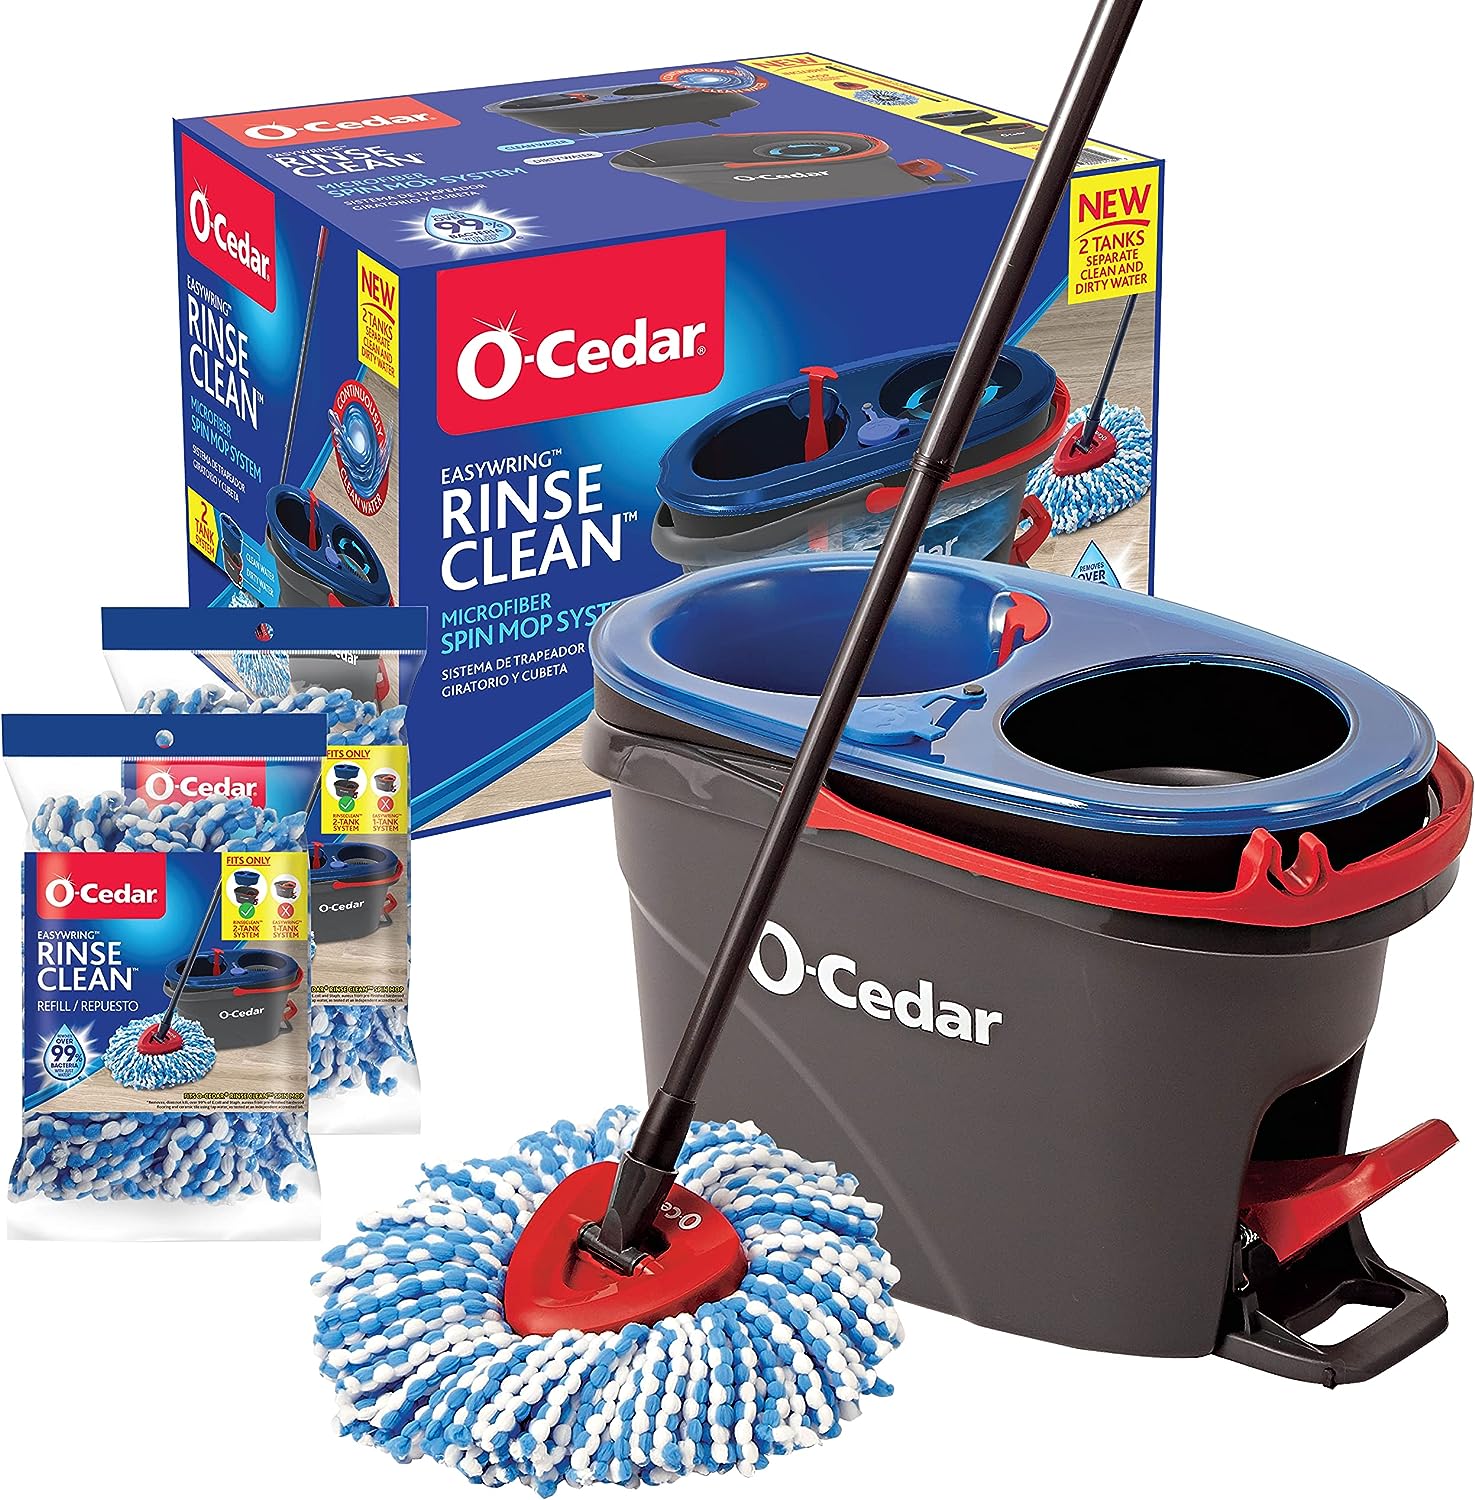 O-Cedar EasyWring RinseClean Microfiber Spin Mop & [...]